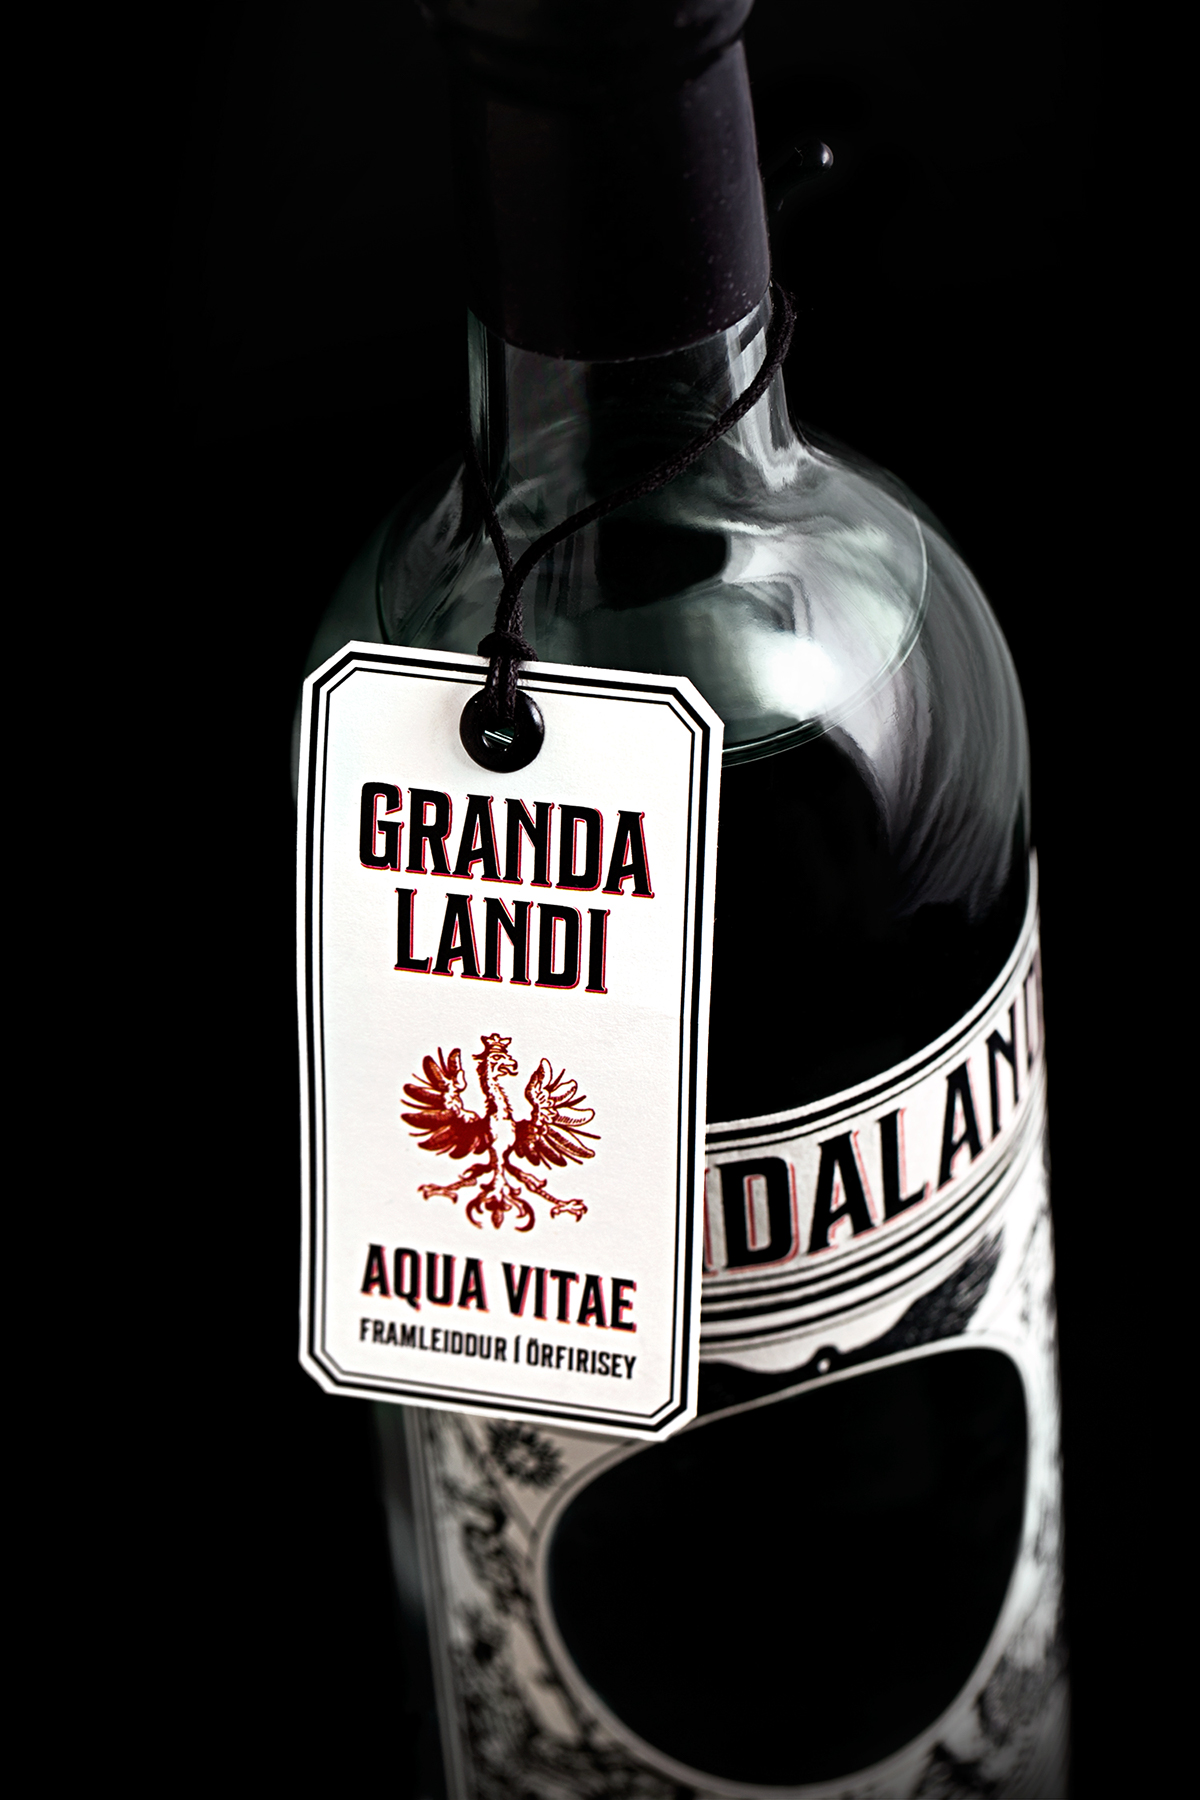 Moonshine Grandalandi alchemy hermetism aqua vitae iceland alcohol home brew Occultism Vodka Grain Alcohol Ingi Kristján moon Landi bottle